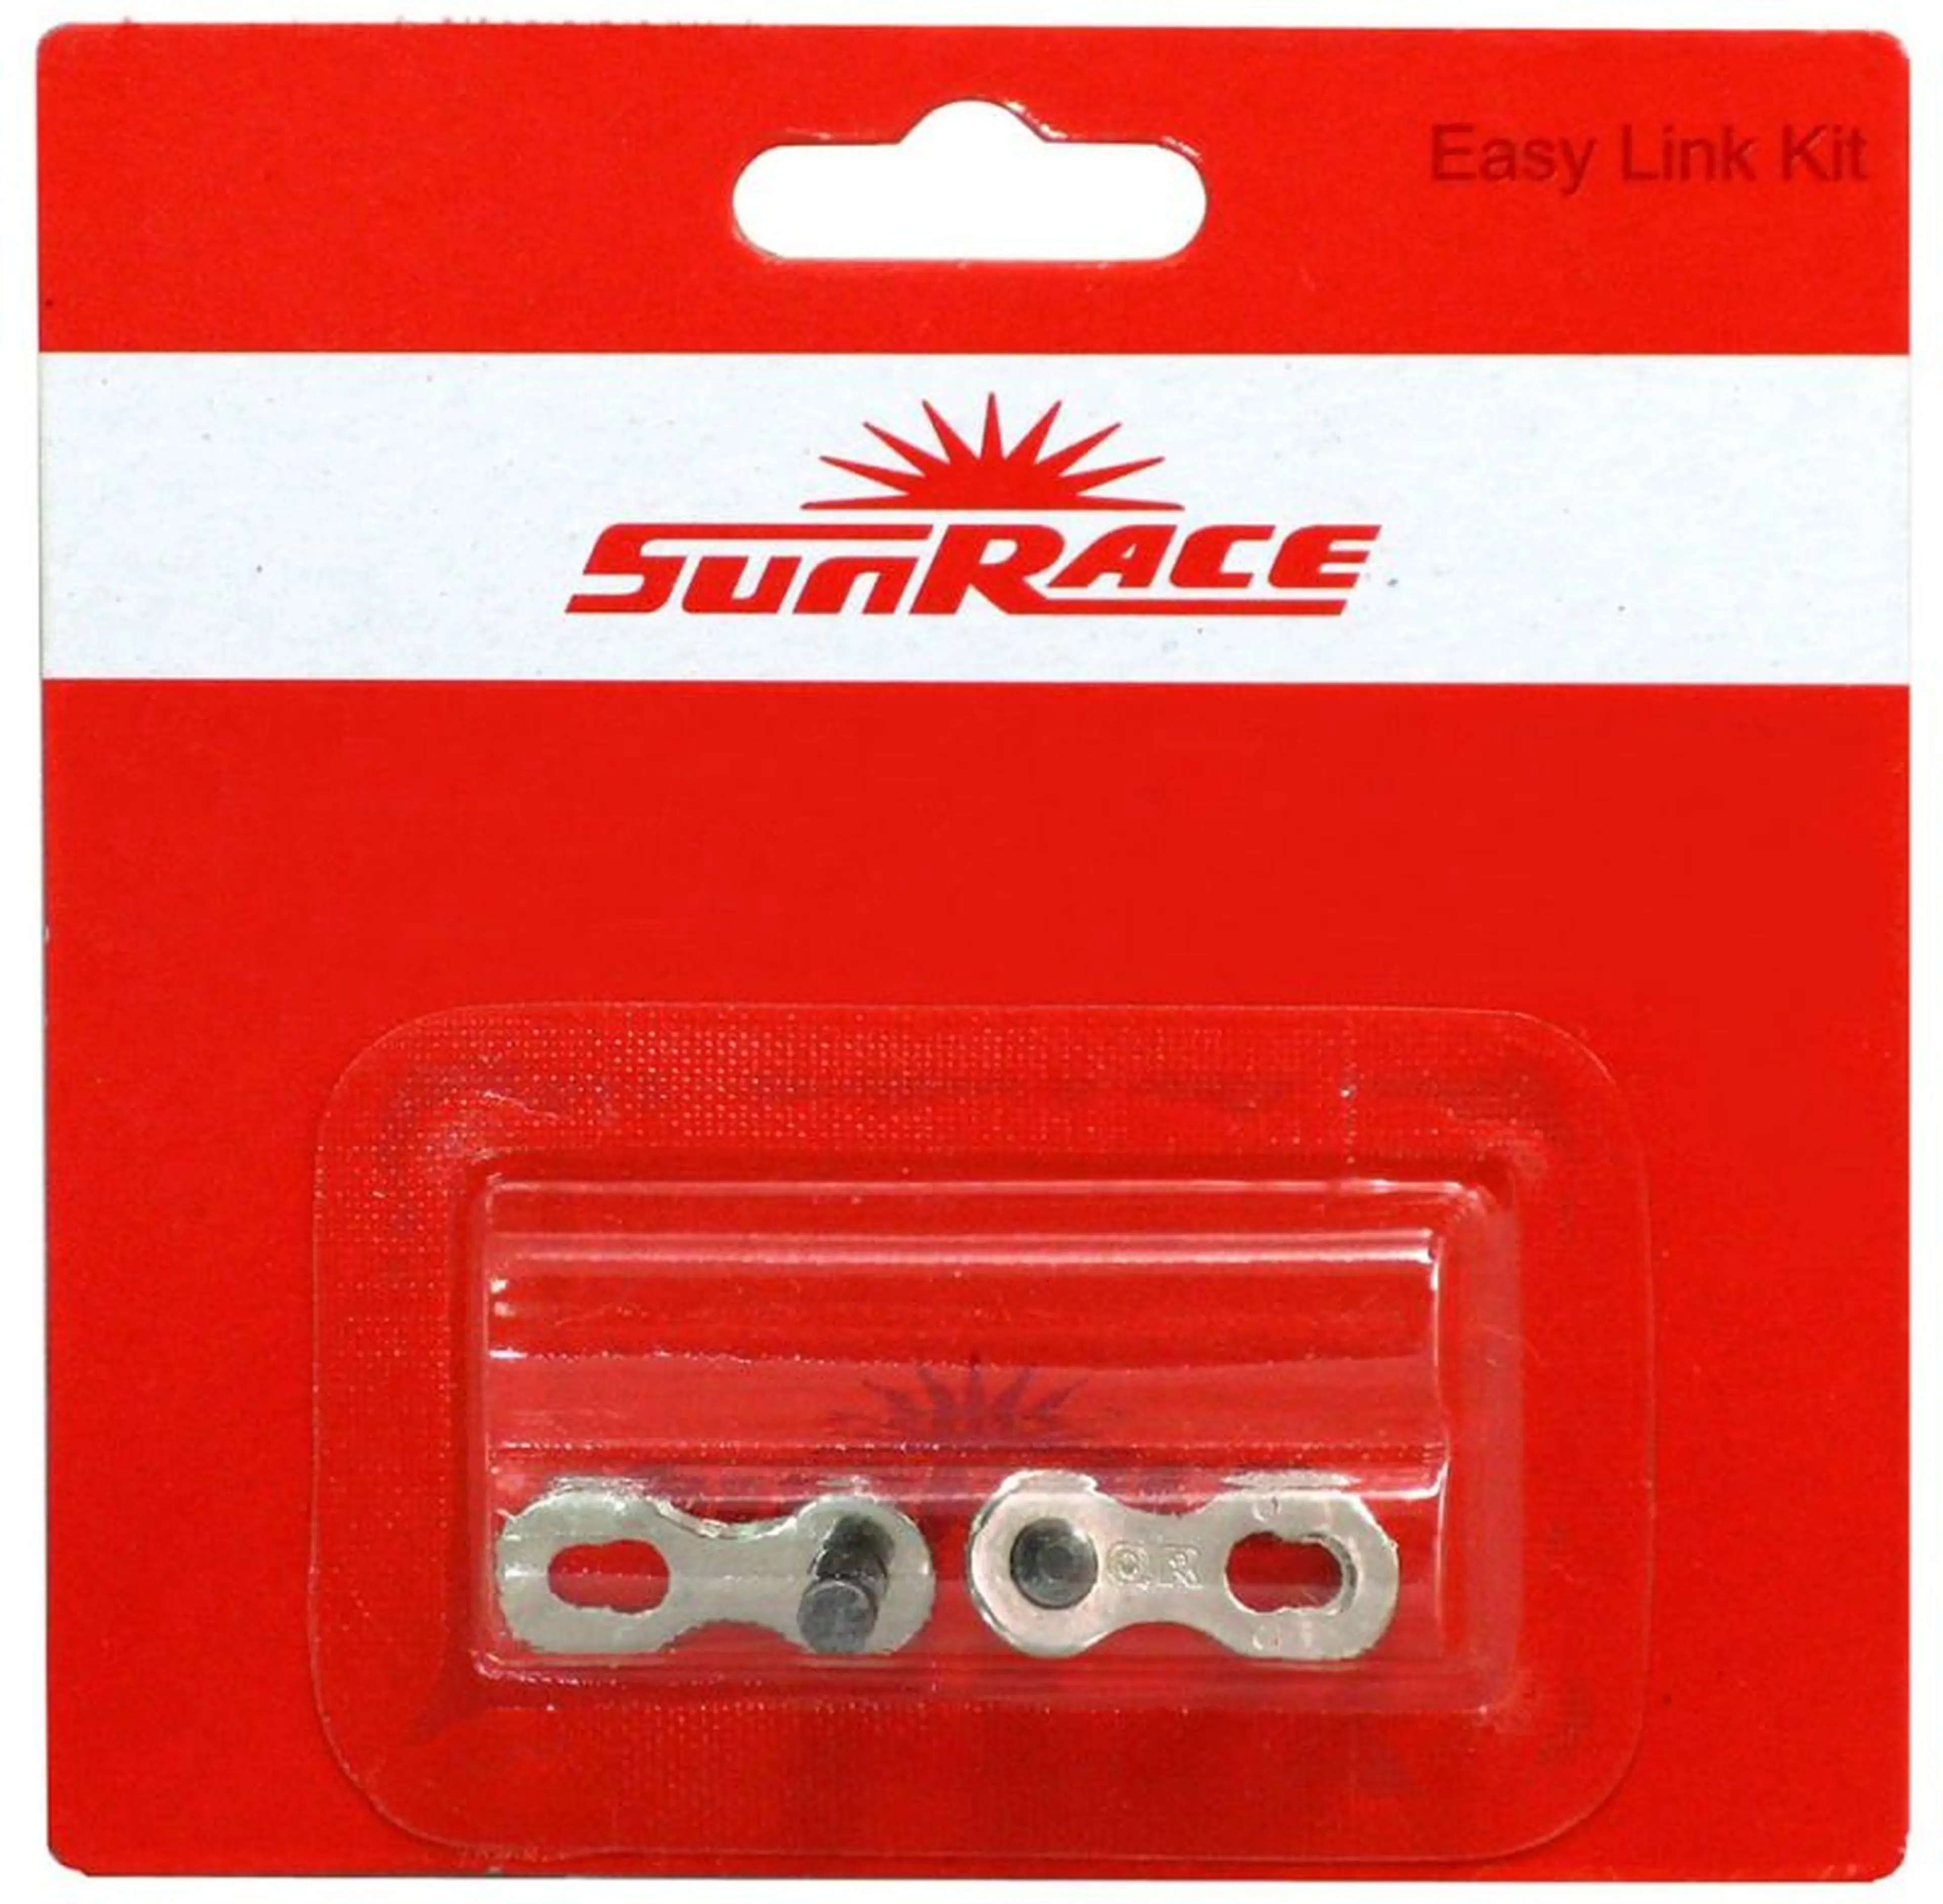 Image SunRace Easy Link - 10 vit.